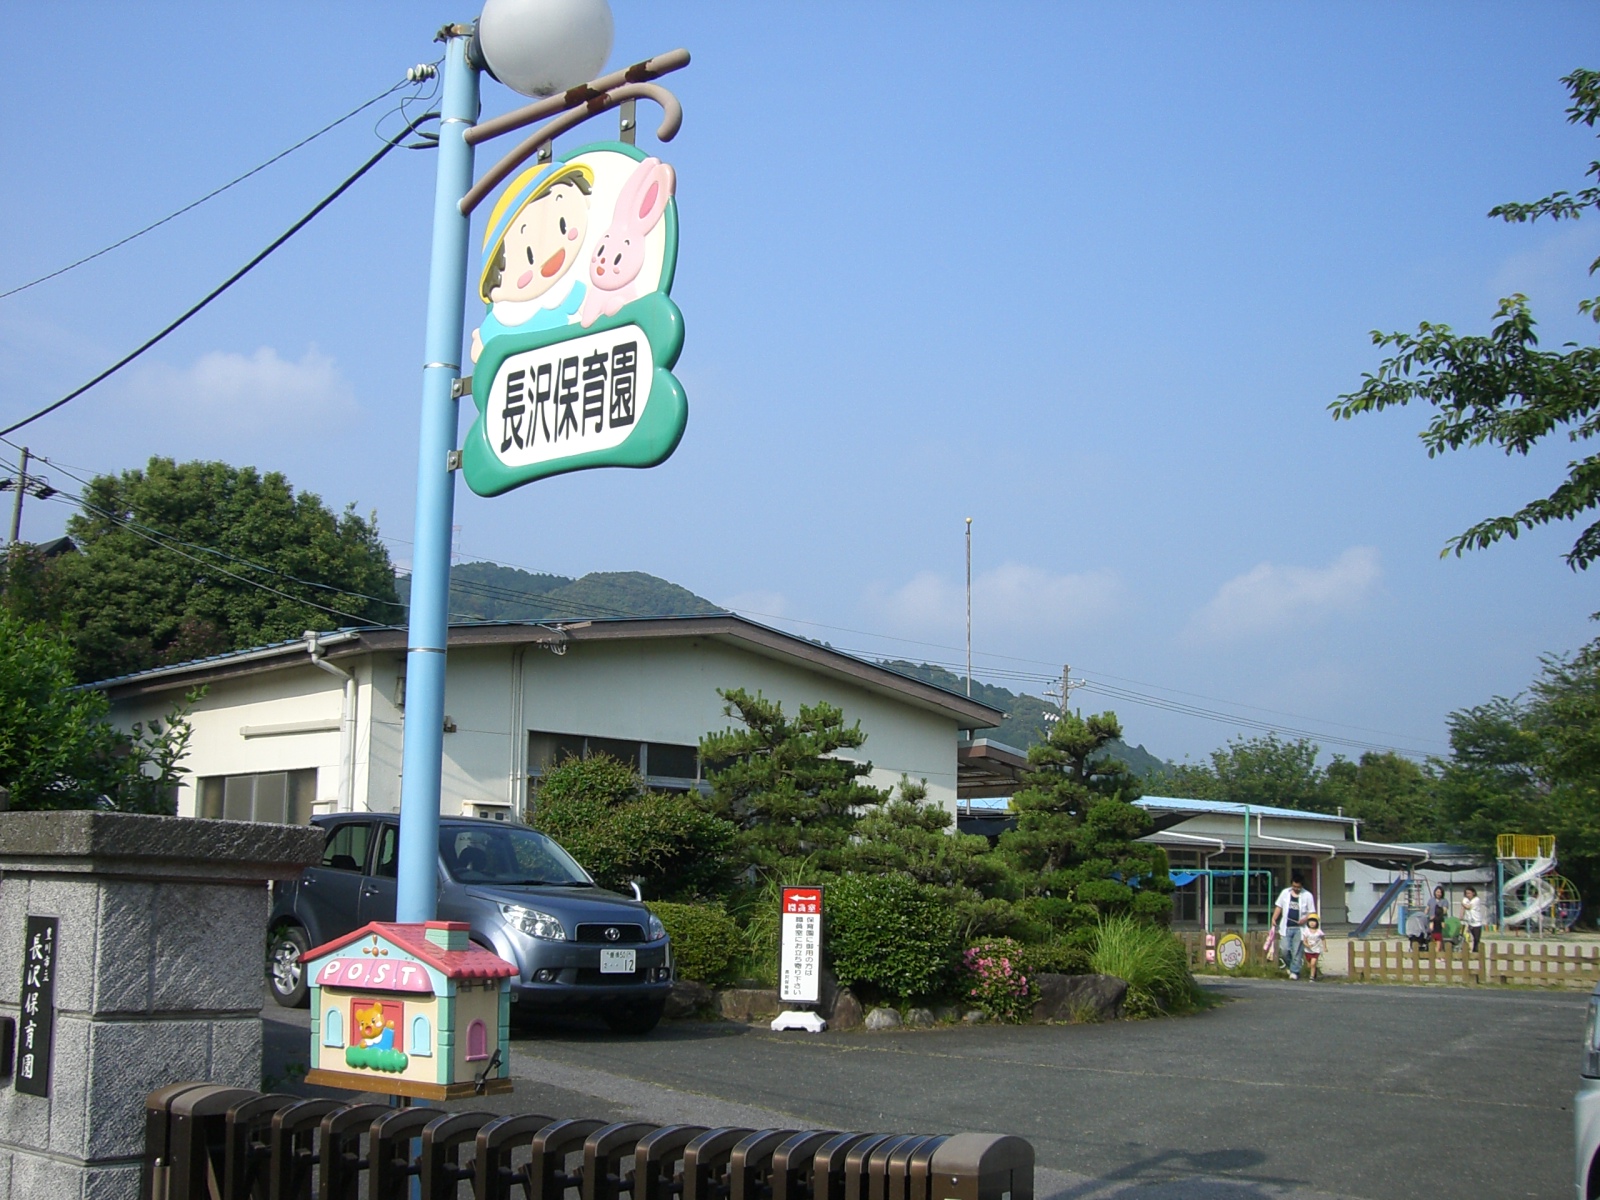 kindergarten ・ Nursery. Toyokawa Municipal Nagasawa nursery school (kindergarten ・ 1084m to the nursery)